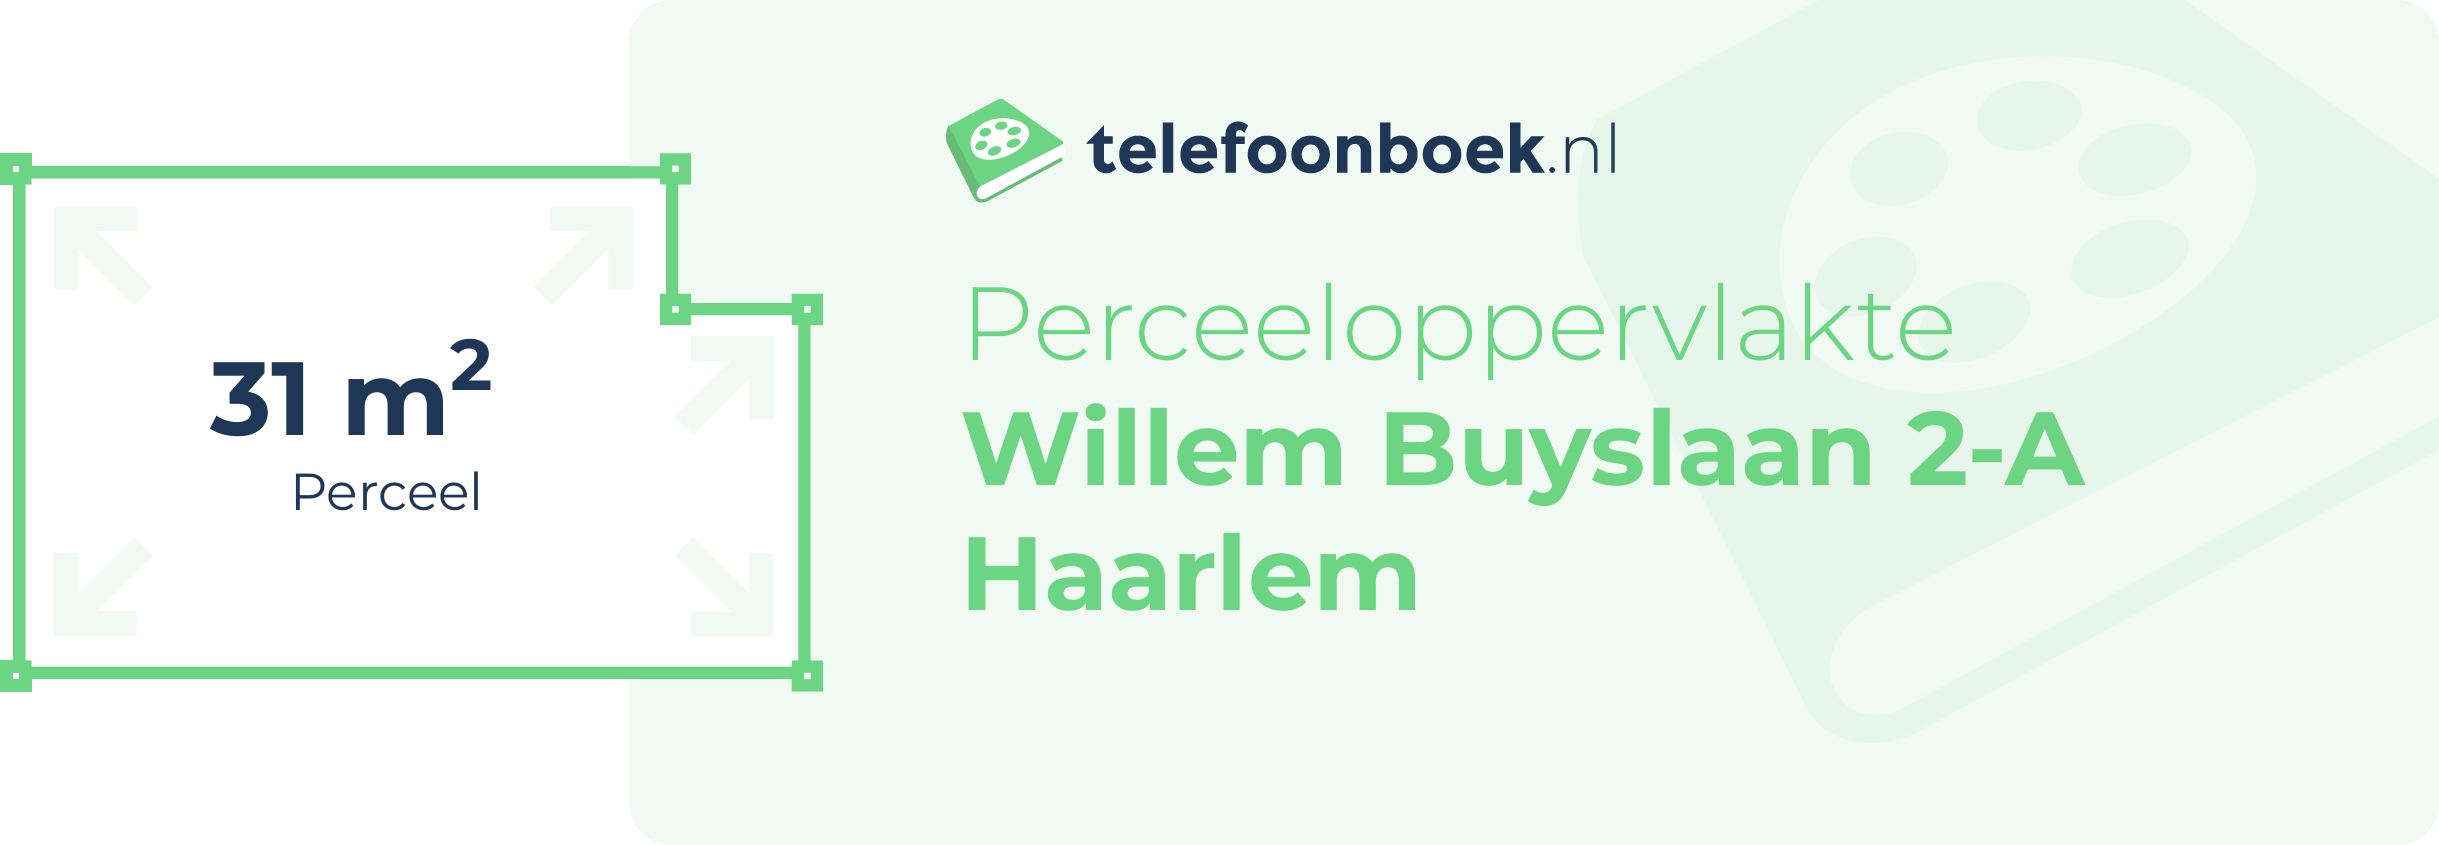 Perceeloppervlakte Willem Buyslaan 2-A Haarlem